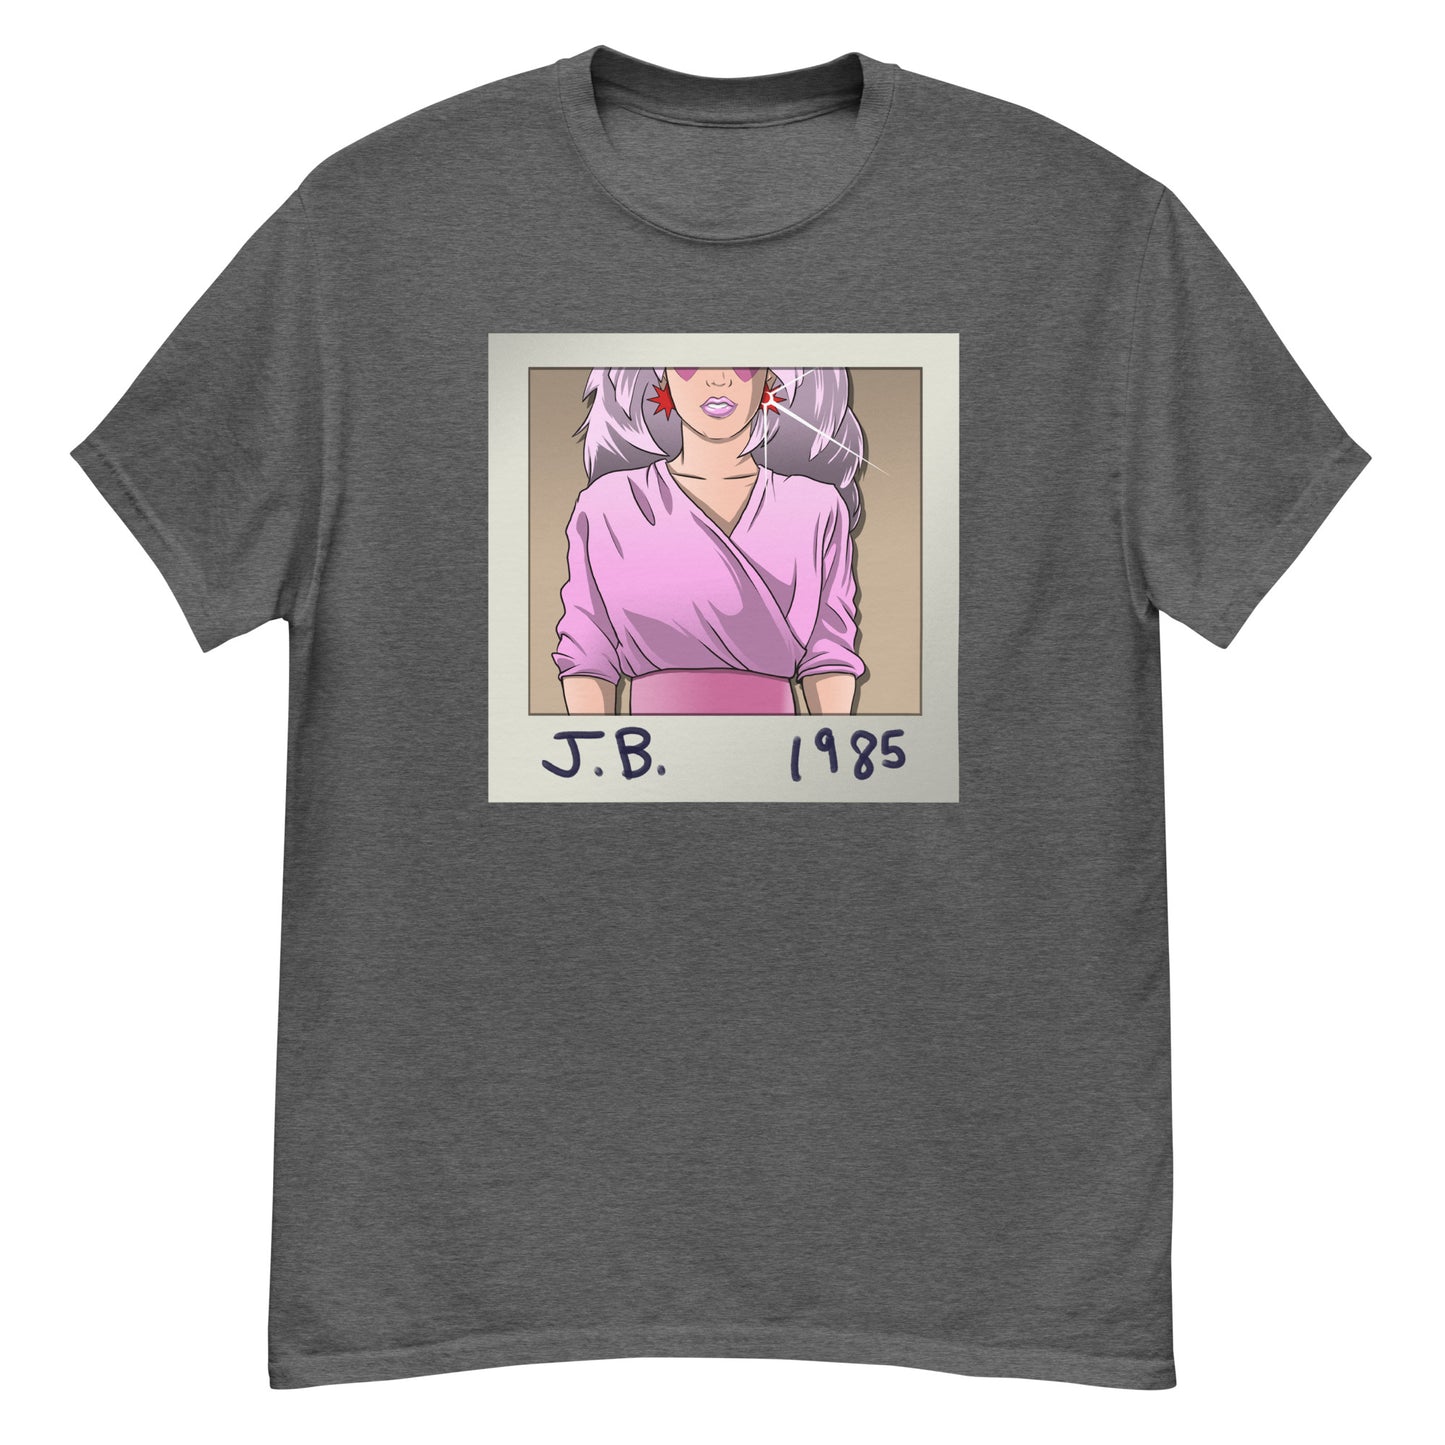 Jerrica Benton 1985 t-shirt